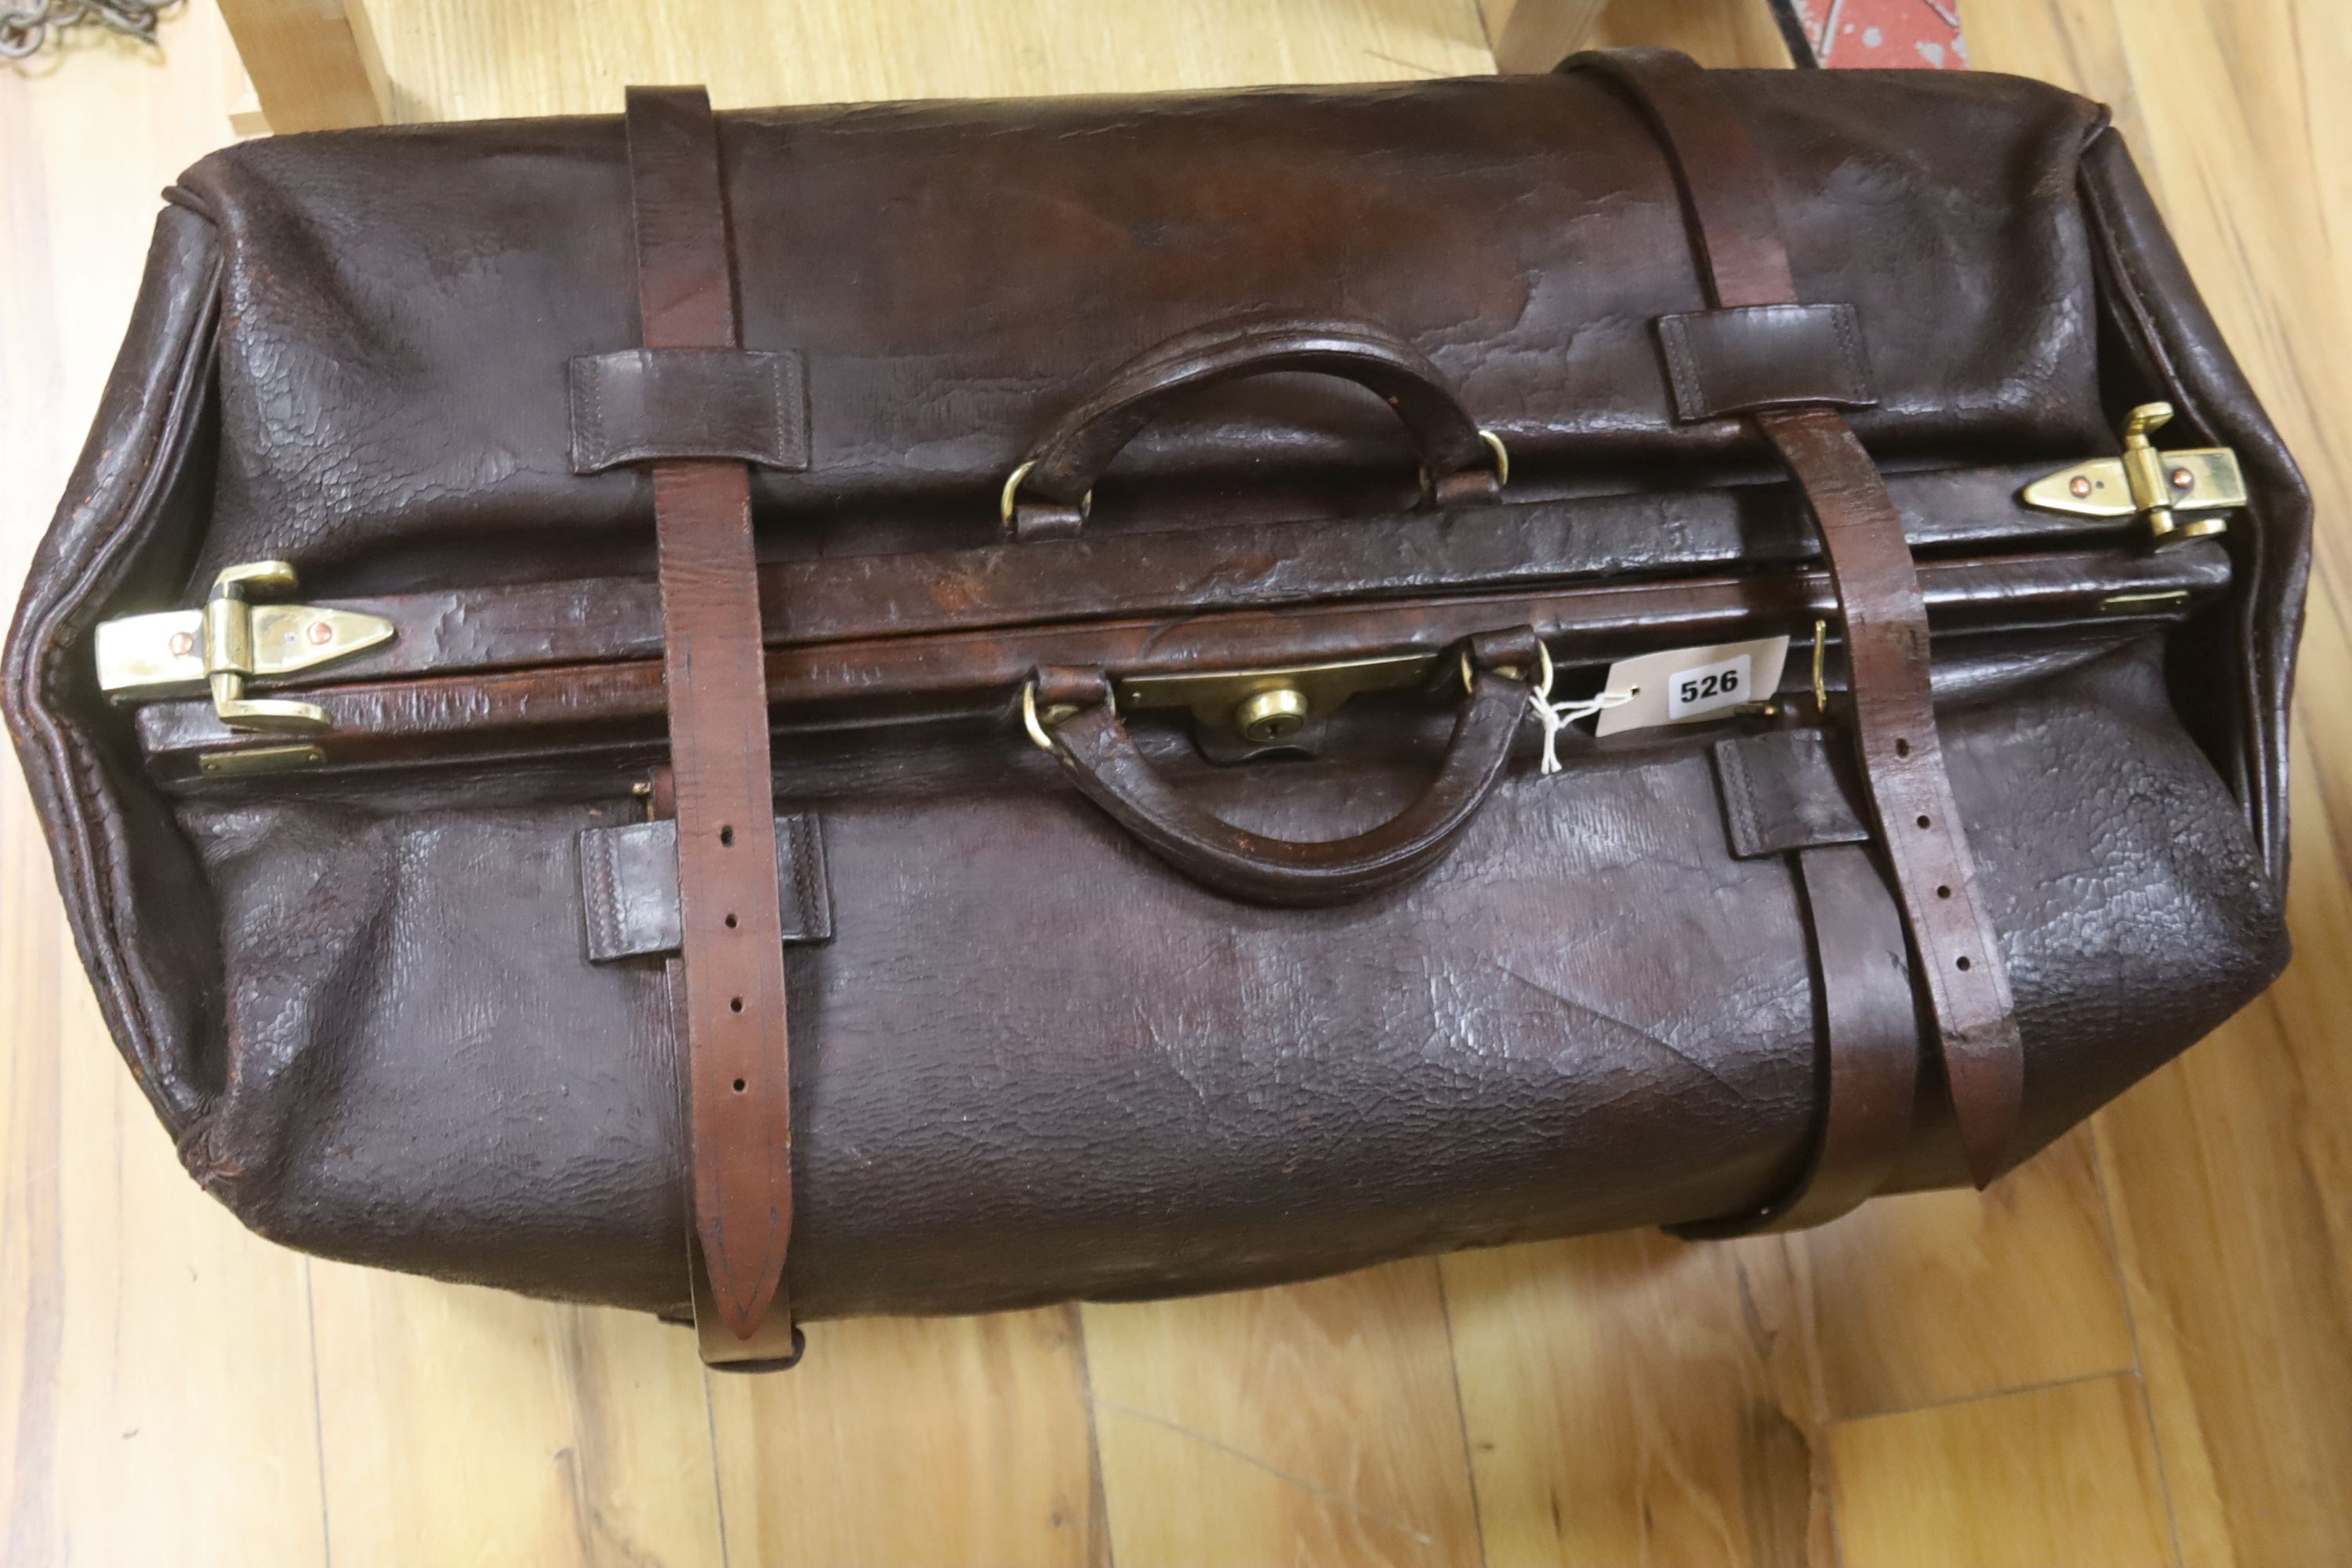 A Finnigan's Manchester motoring Gladstone bag - oversized. Circa 1910, 81cm long